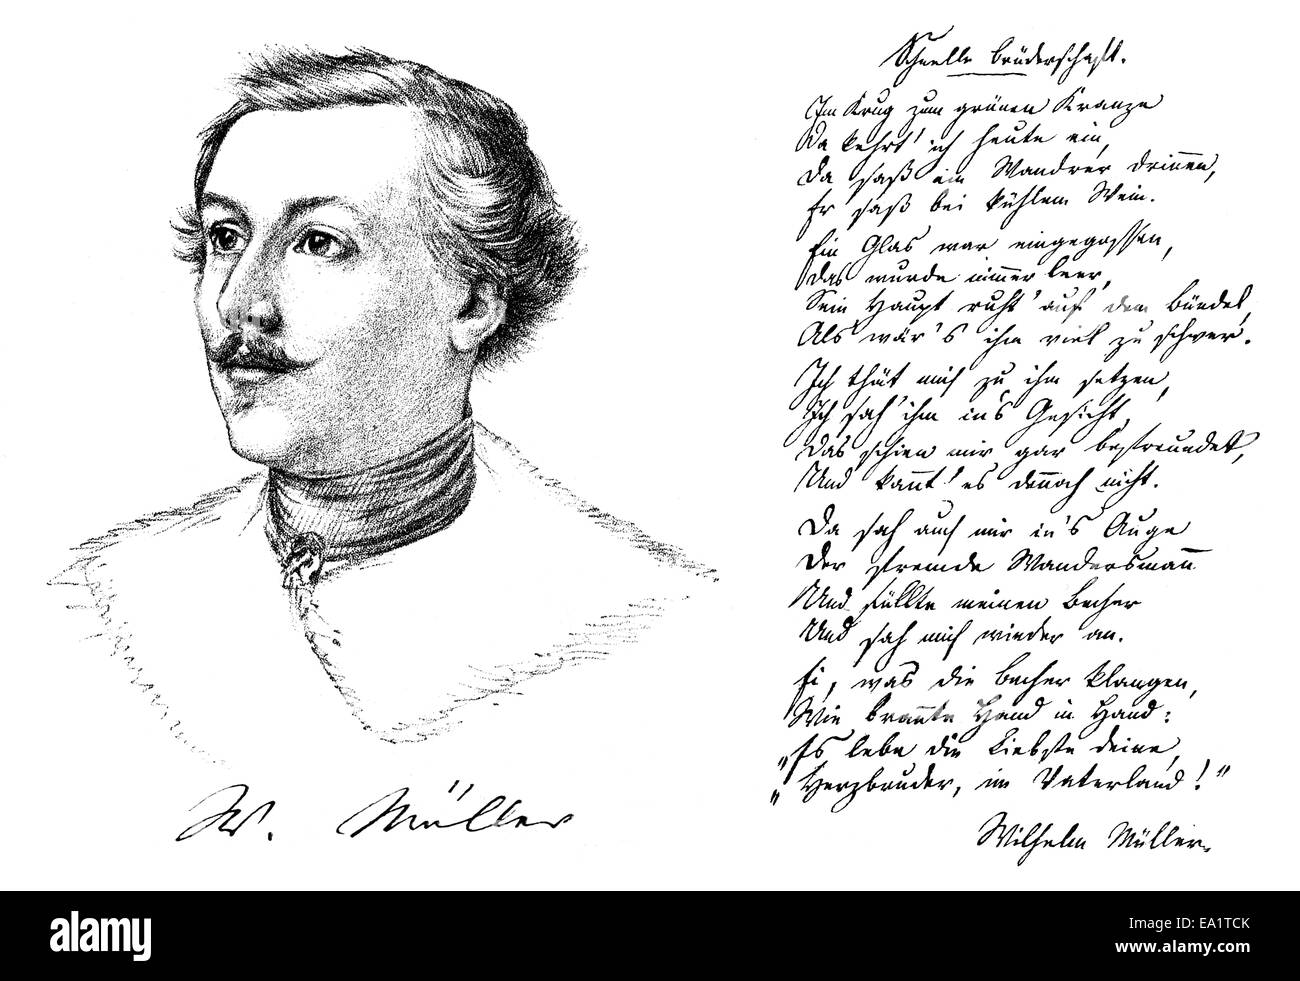 historical manuscript and portrait of Johann Ludwig Wilhelm Mueller, 1794-1827, German poet, Historische Handschrift und  Portai Stock Photo